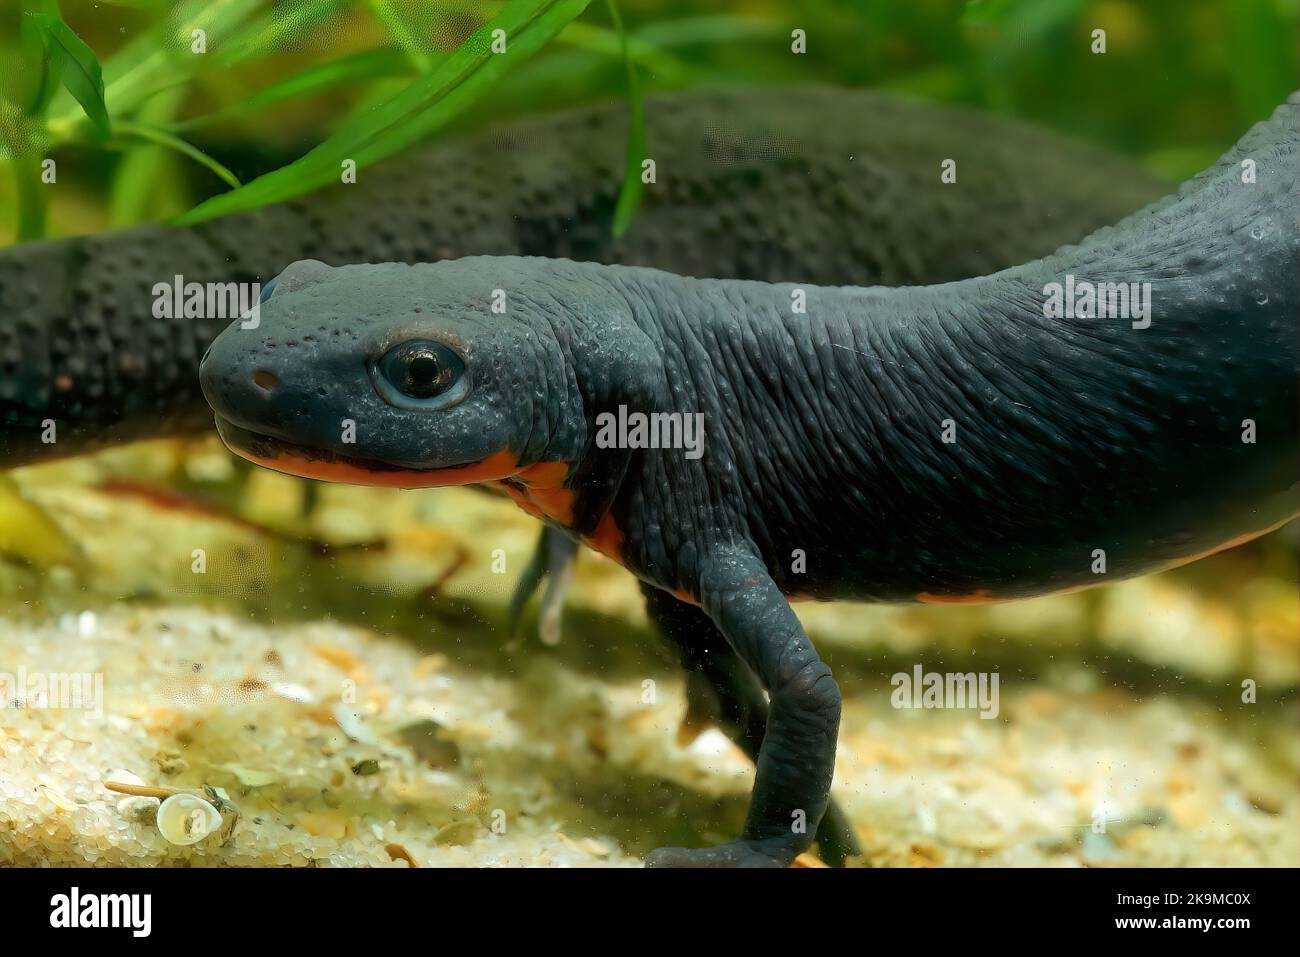 Closeup on an aquatic dark black adult Chinese firebellied newt, Cynops orientalis underwater Stock Photo